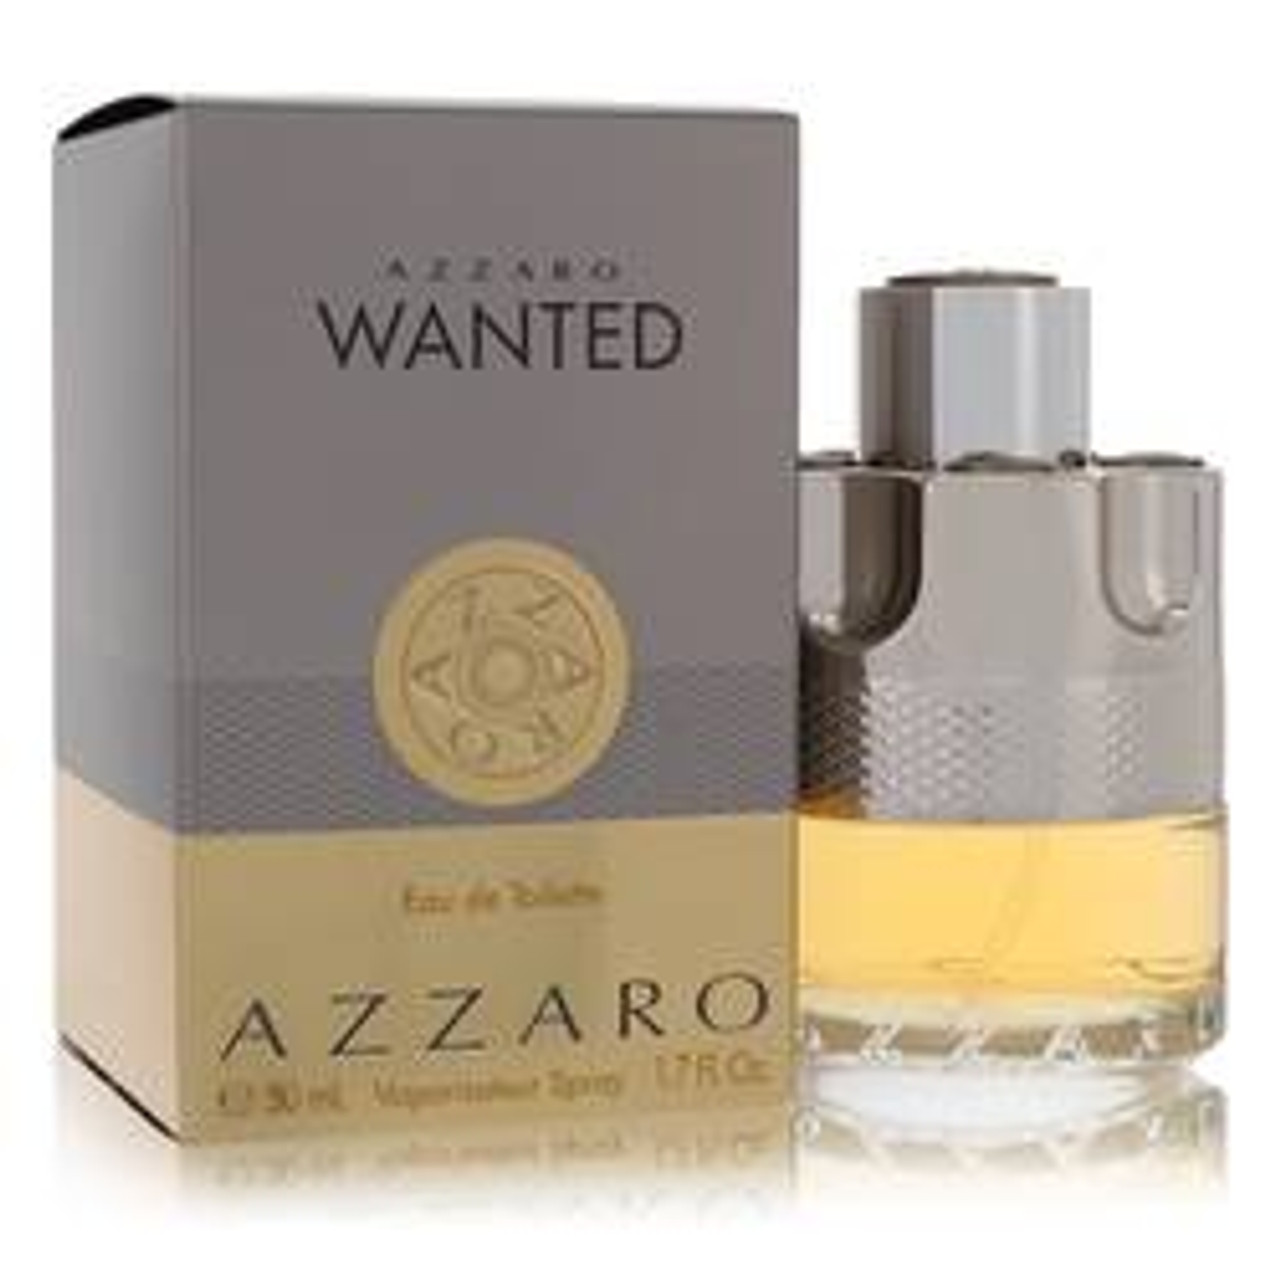 Azzaro Wanted Cologne By Azzaro Eau De Toilette Spray 1.7 oz for Men - *Pre-Order